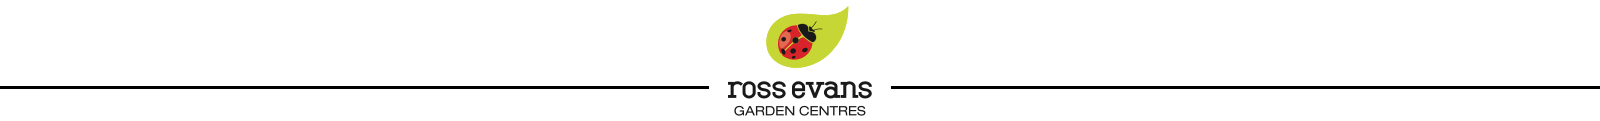 Ross Evans Garden Centre footer logo